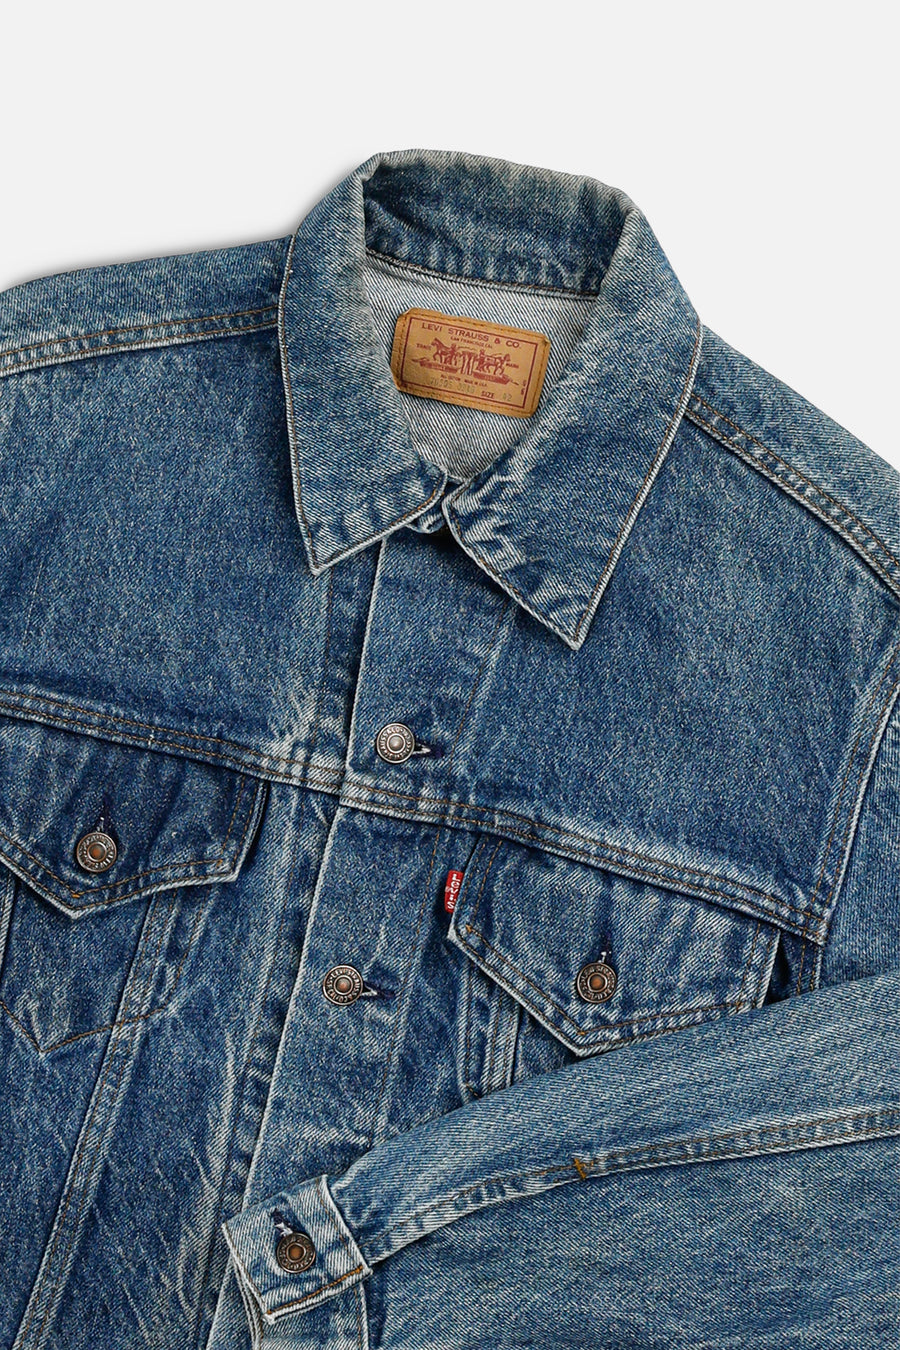 Vintage Levi's USA Denim Jacket - M